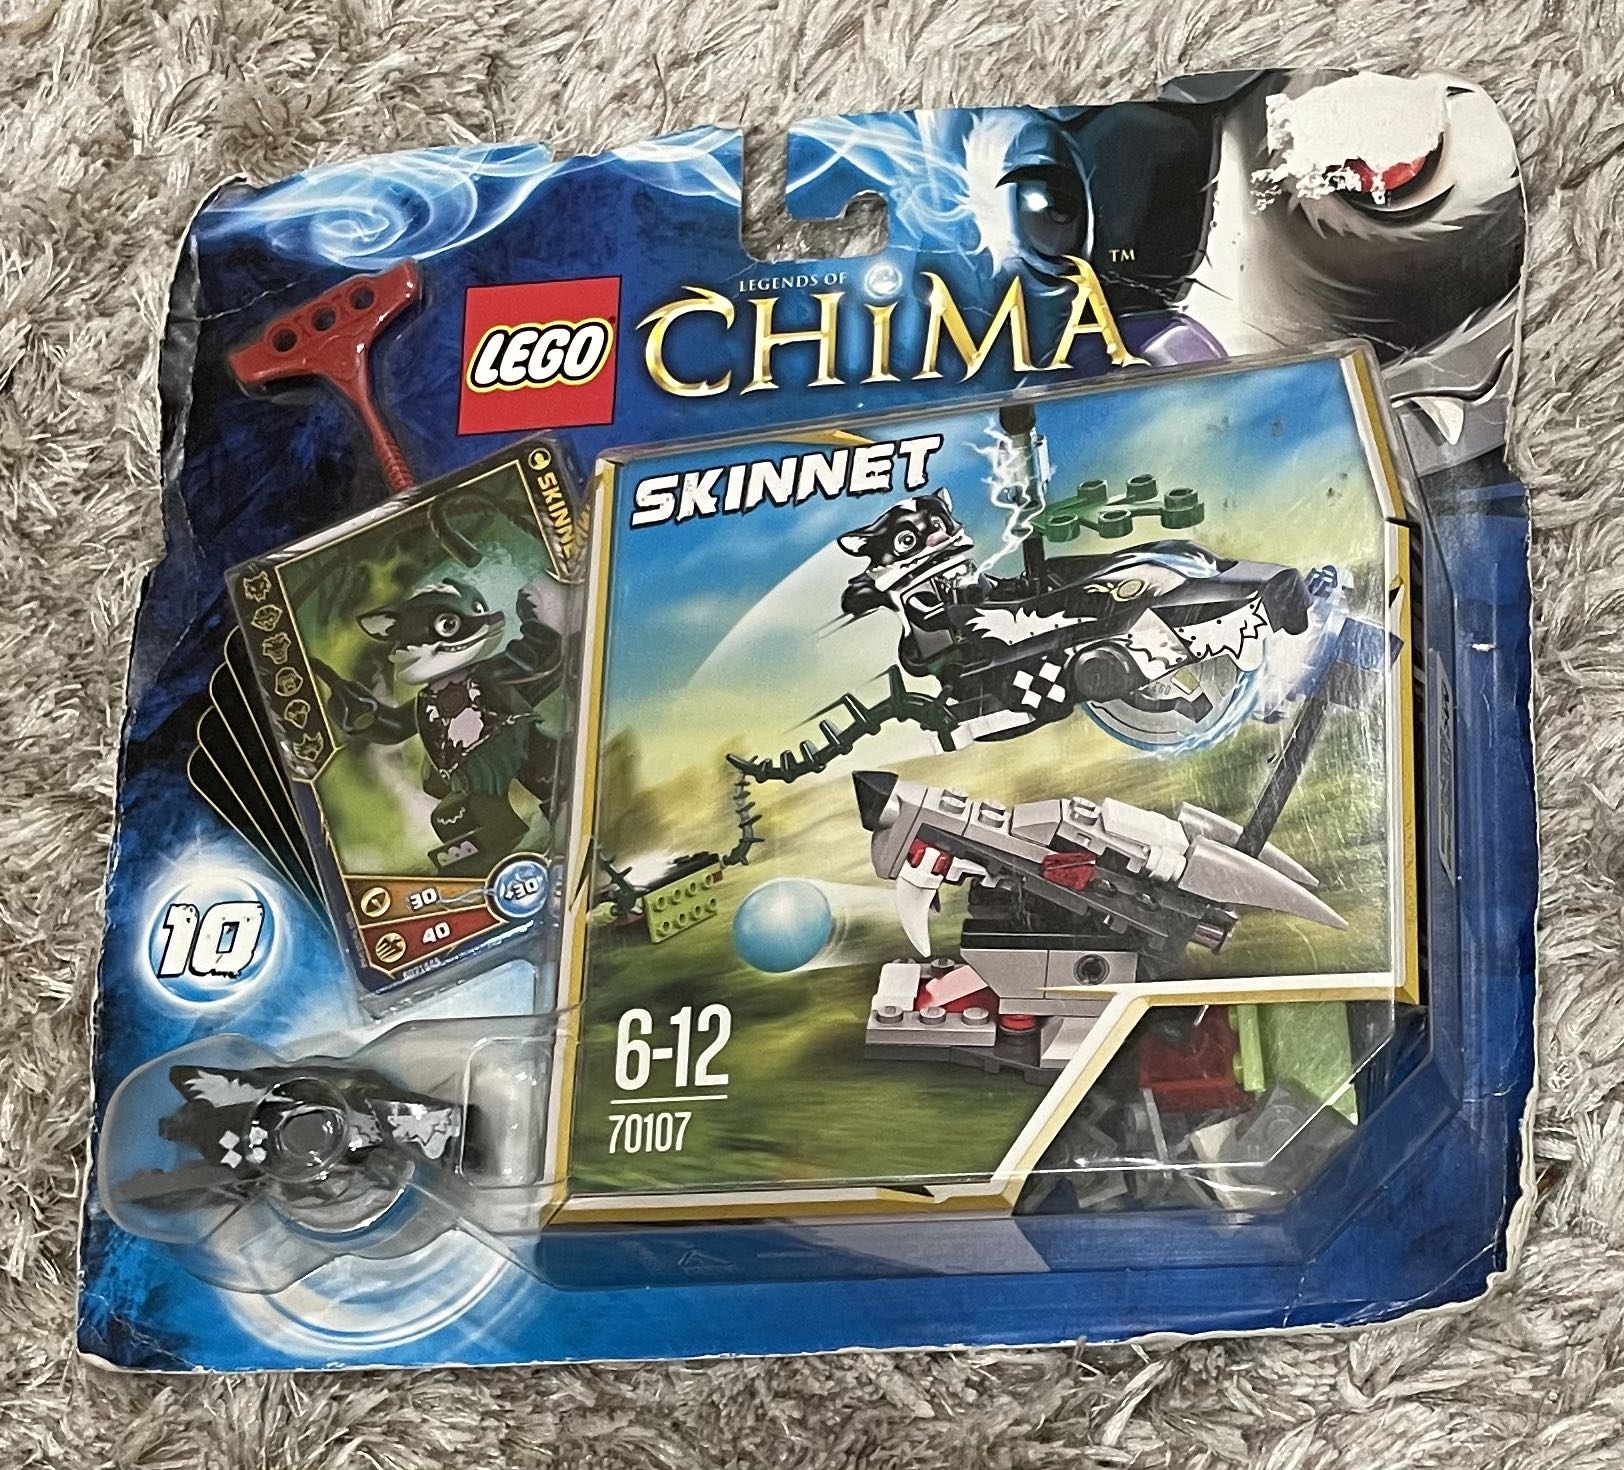 LEGO CHIMA SKINNET 70107 